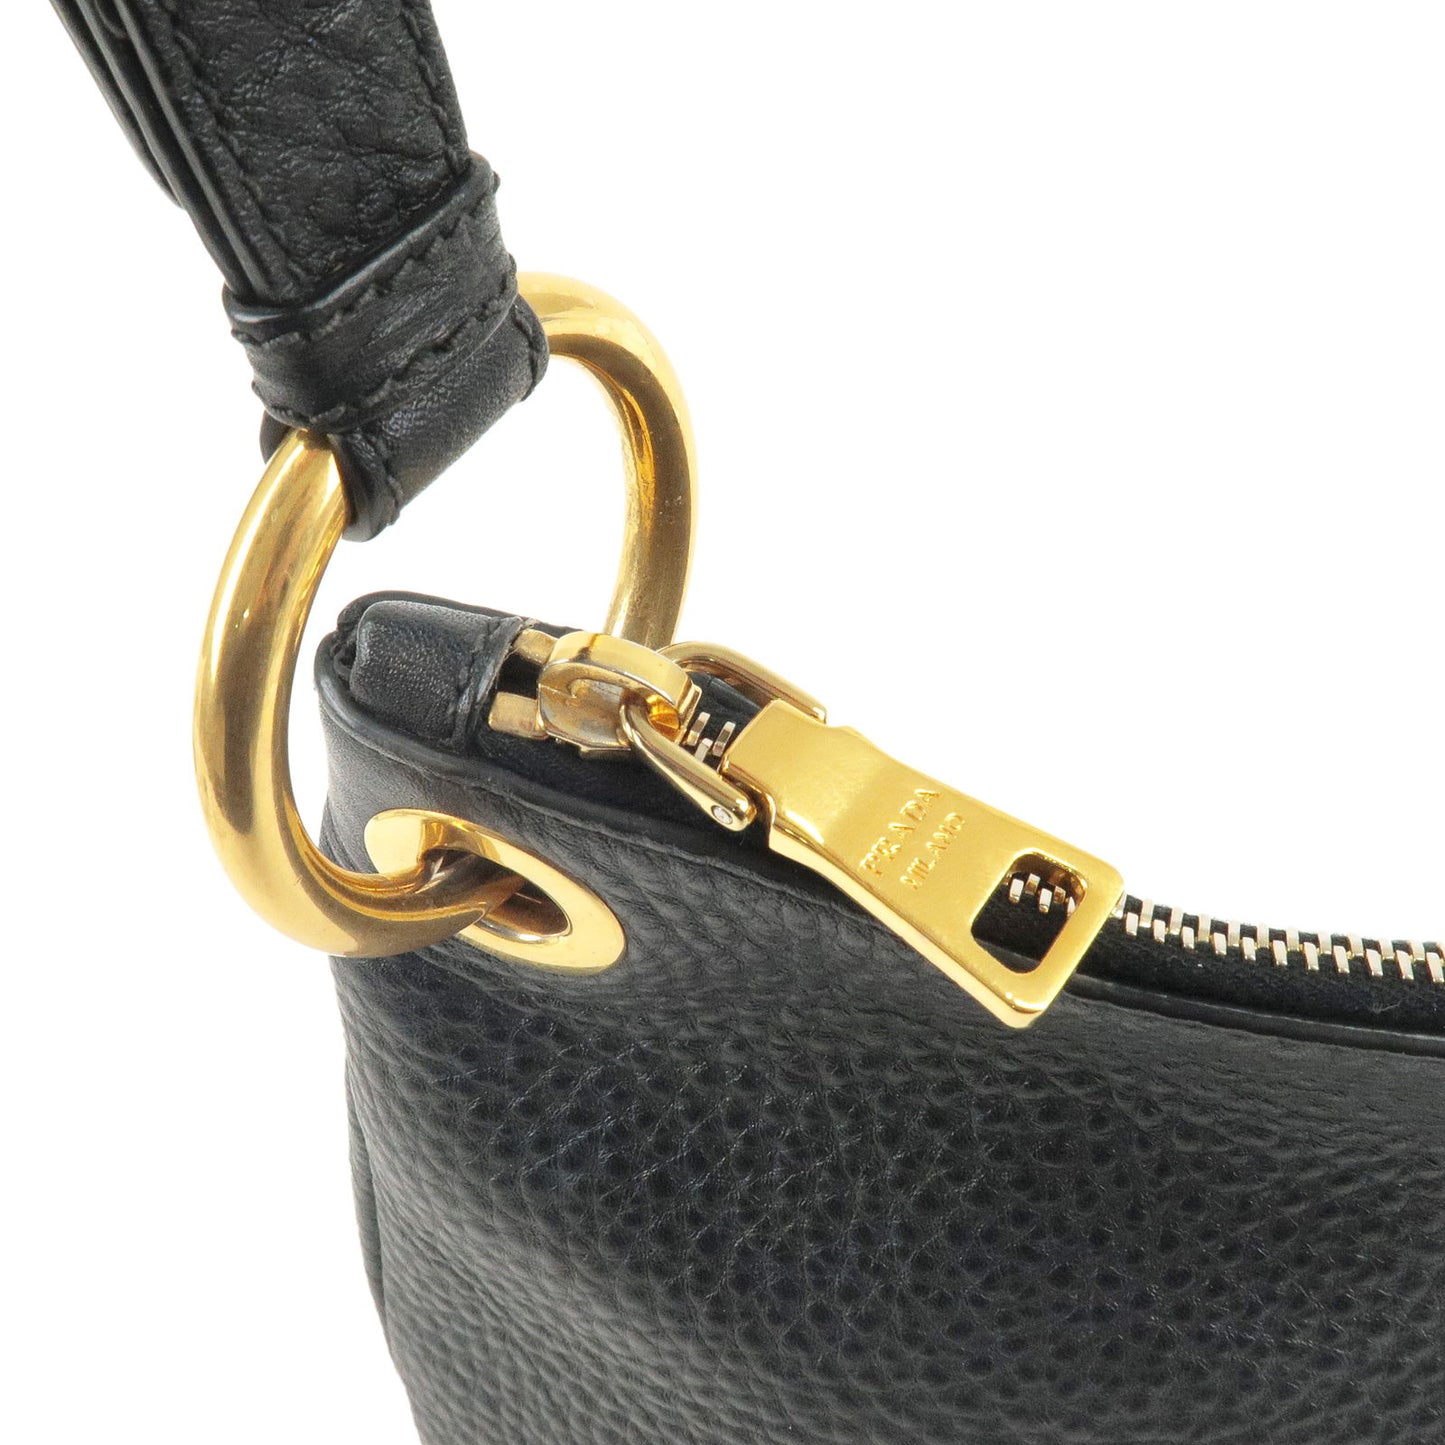 PRADA Logo Leather One Shoulder Bag Black Nero Gold HDW